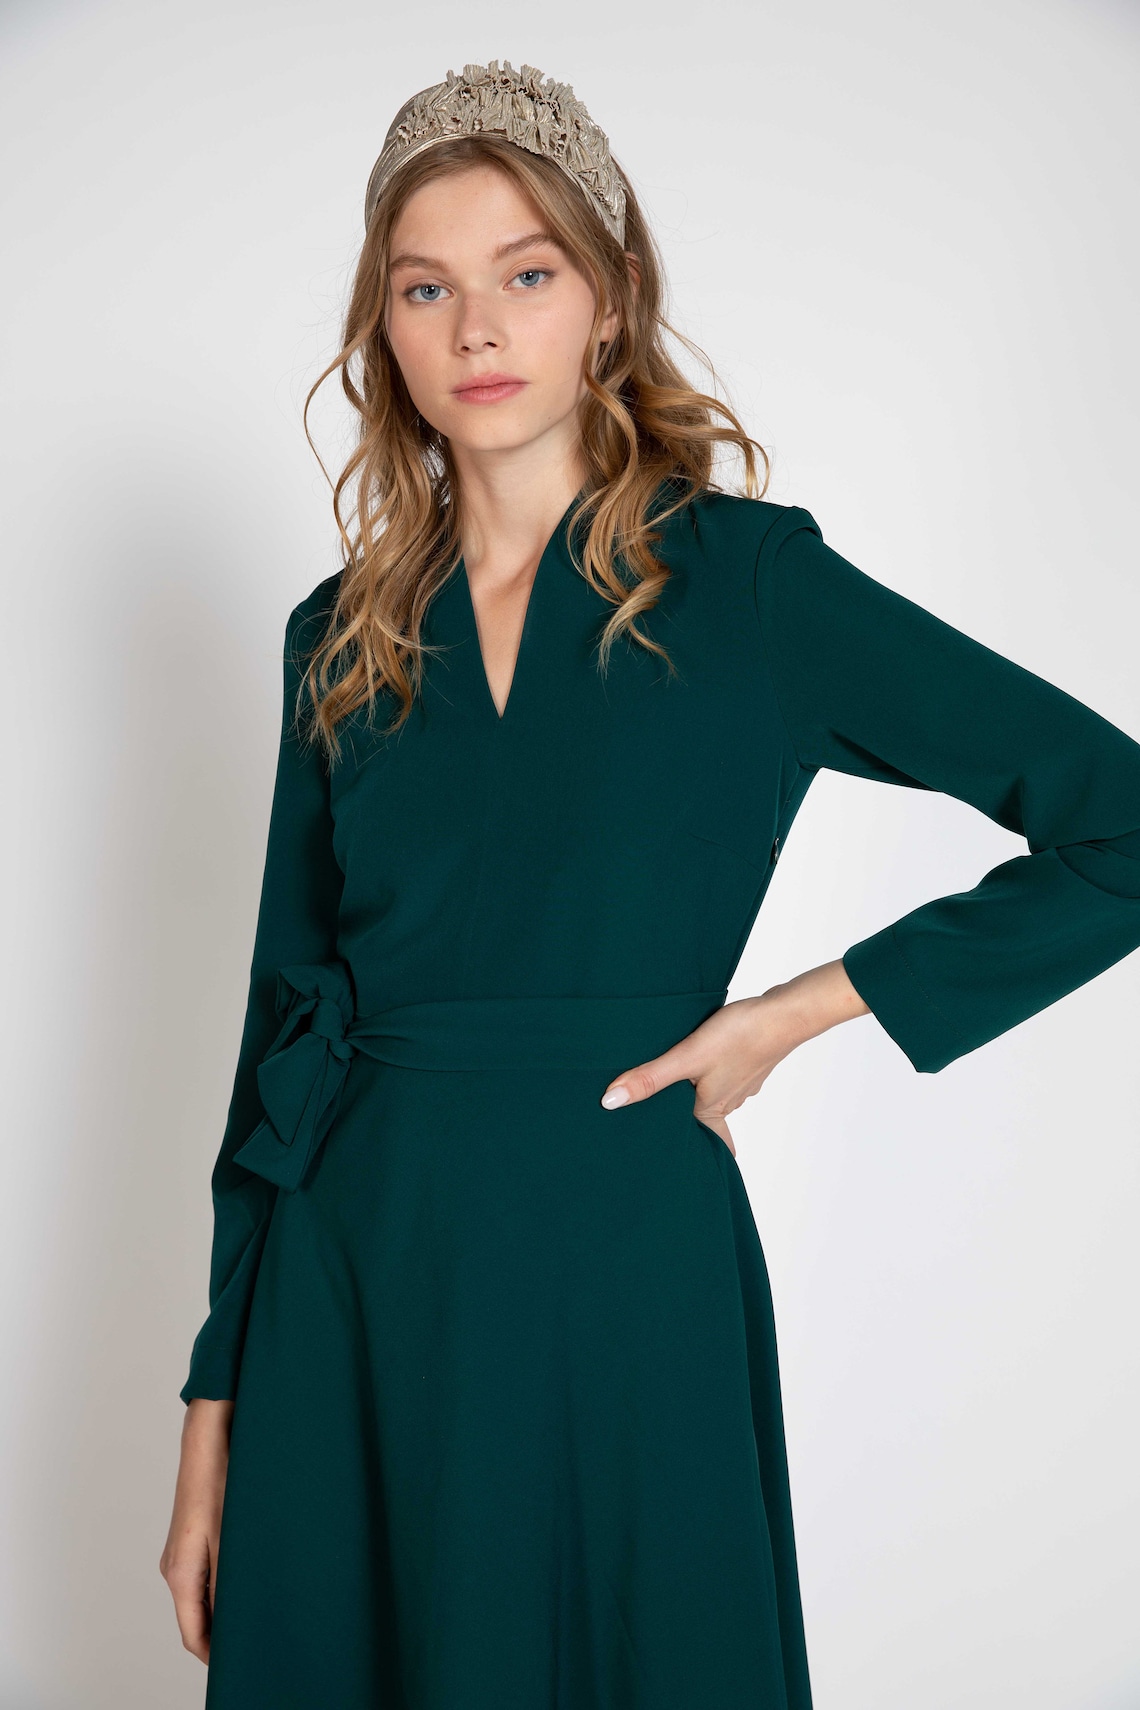 Green winter dress long sleeve dress woman dress fit and | Etsy